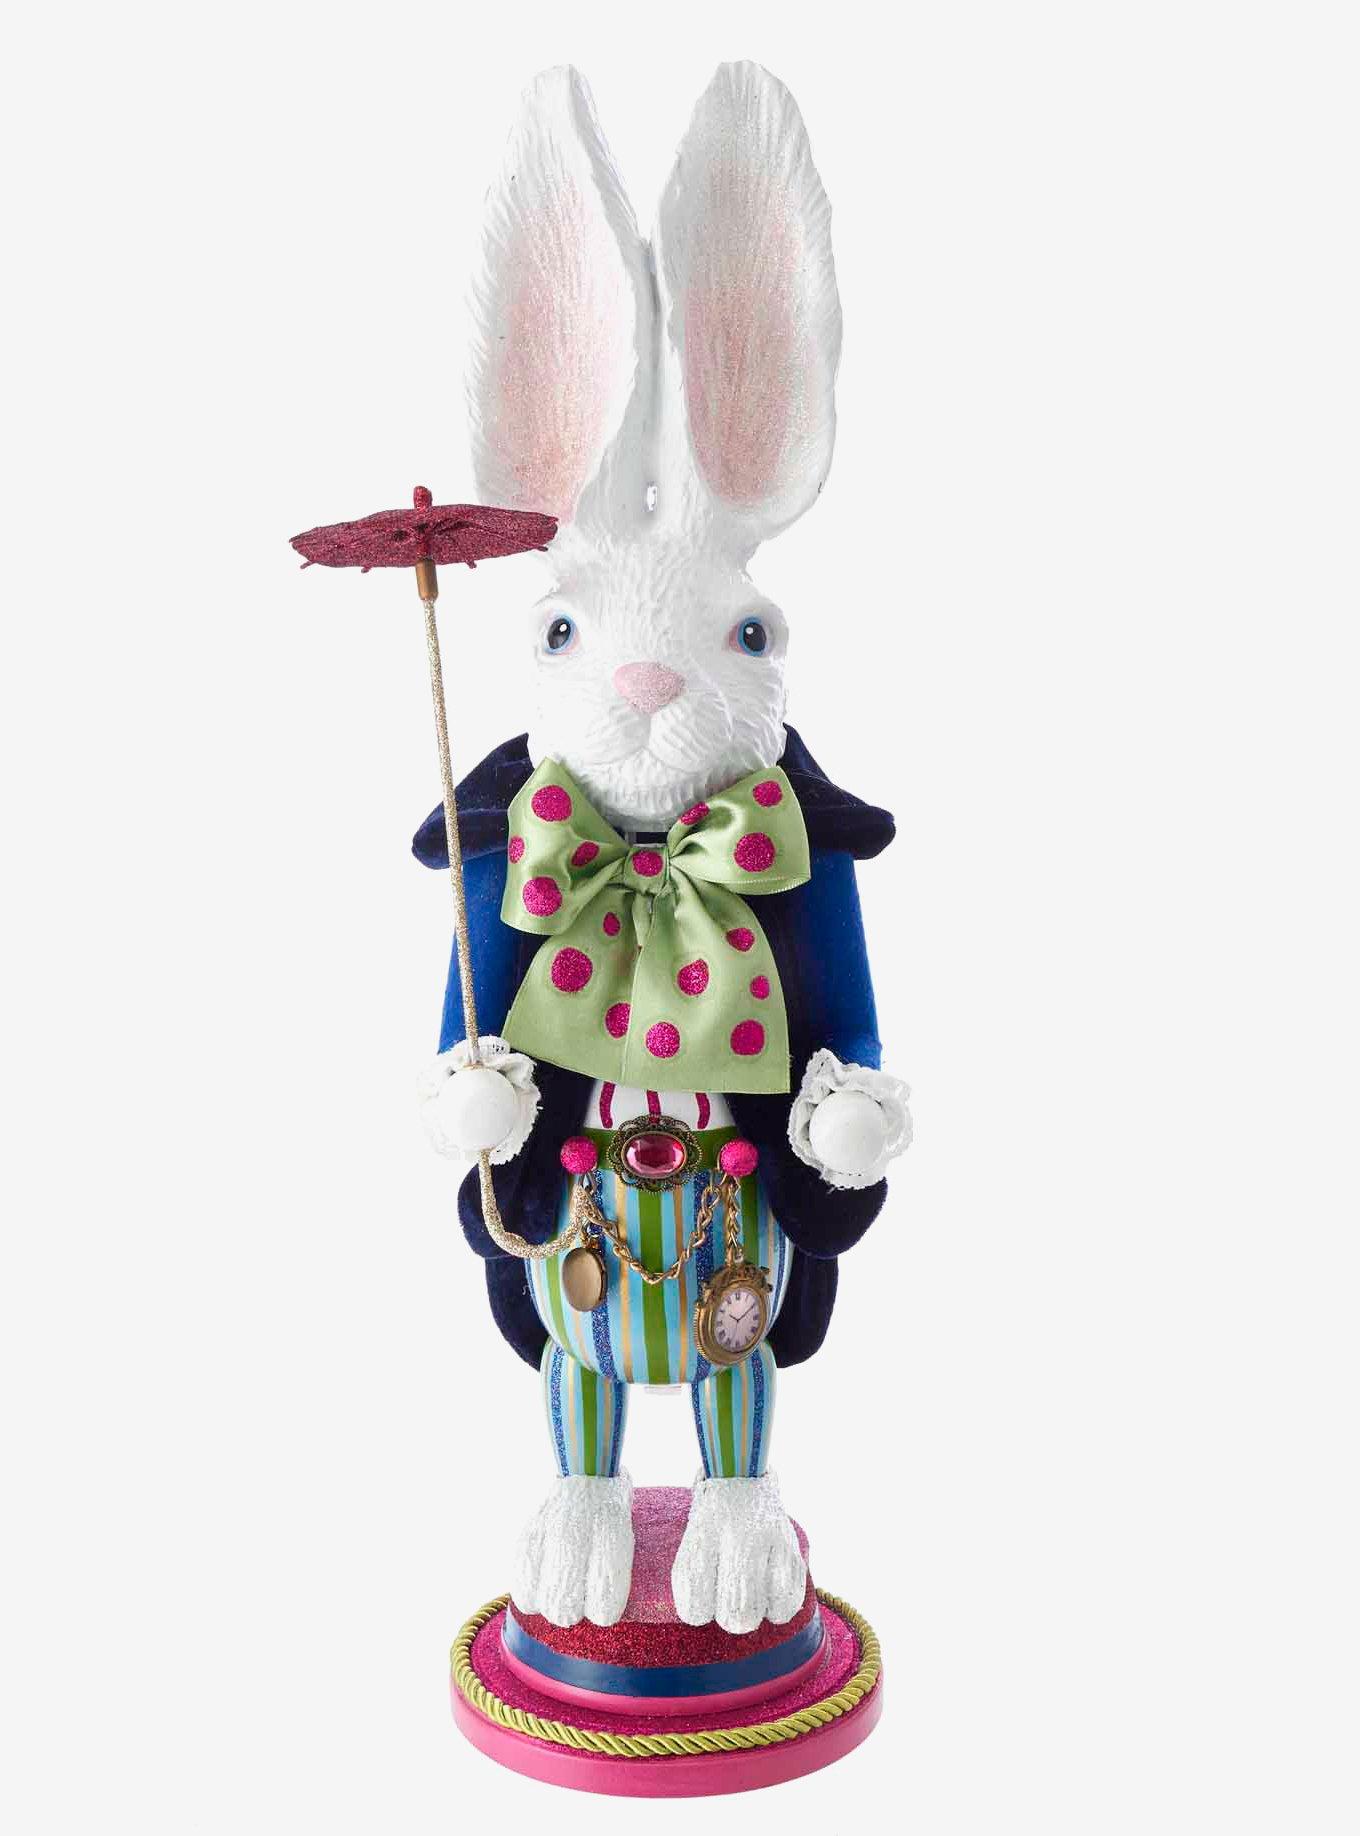 Alice in Wonderland Phunny White Rabbit 8 Plush